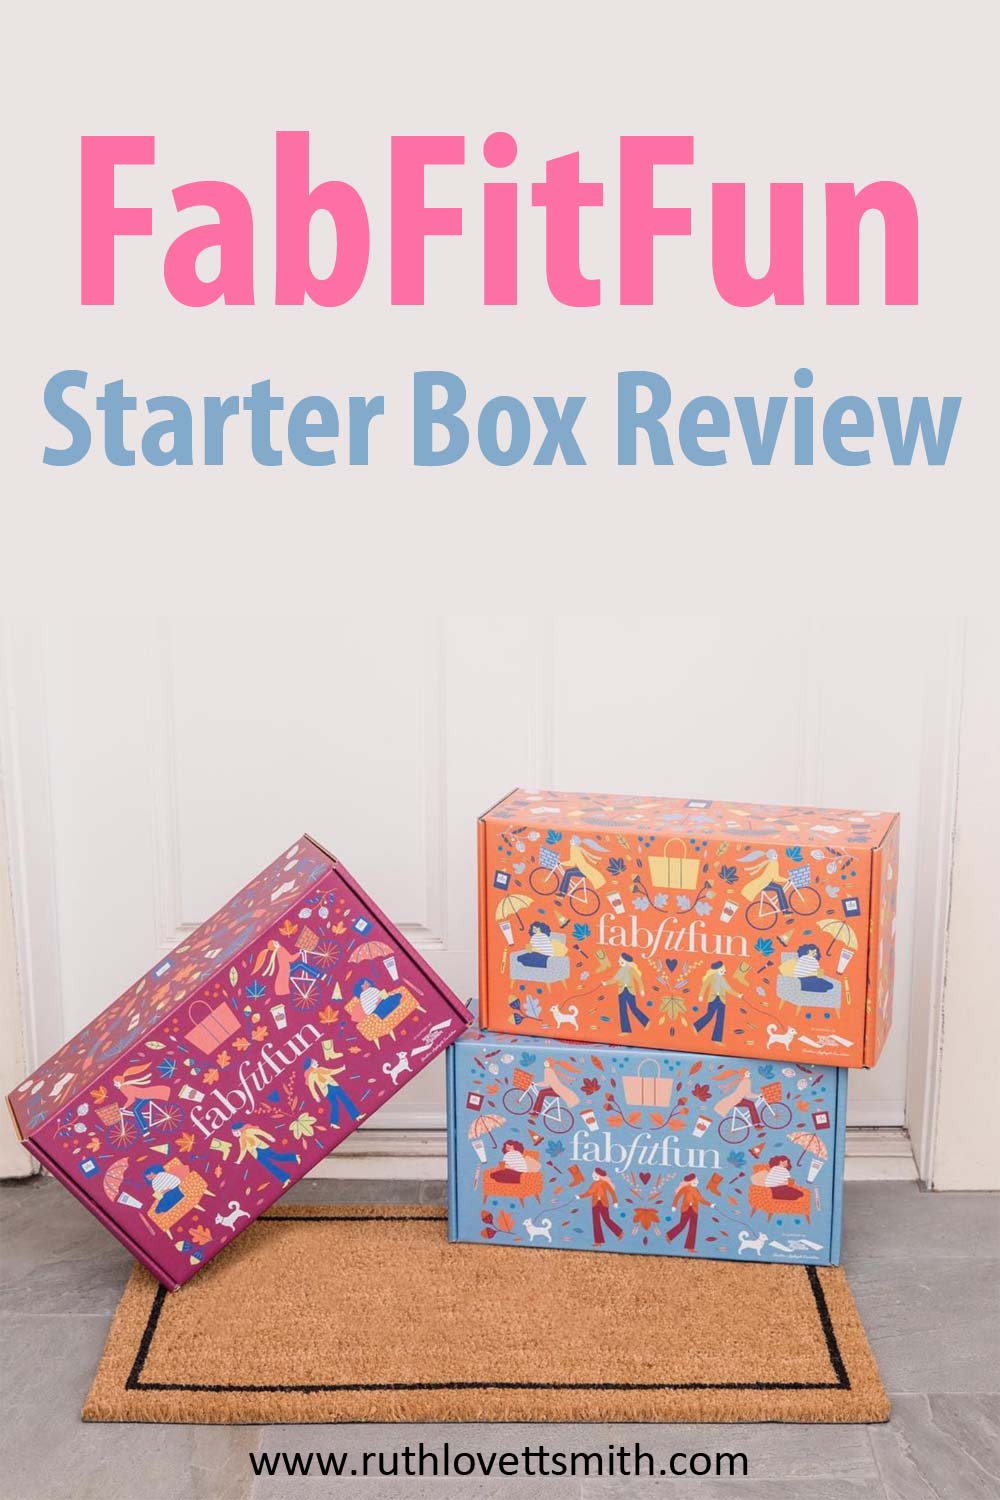 FabFitFun Starter Box